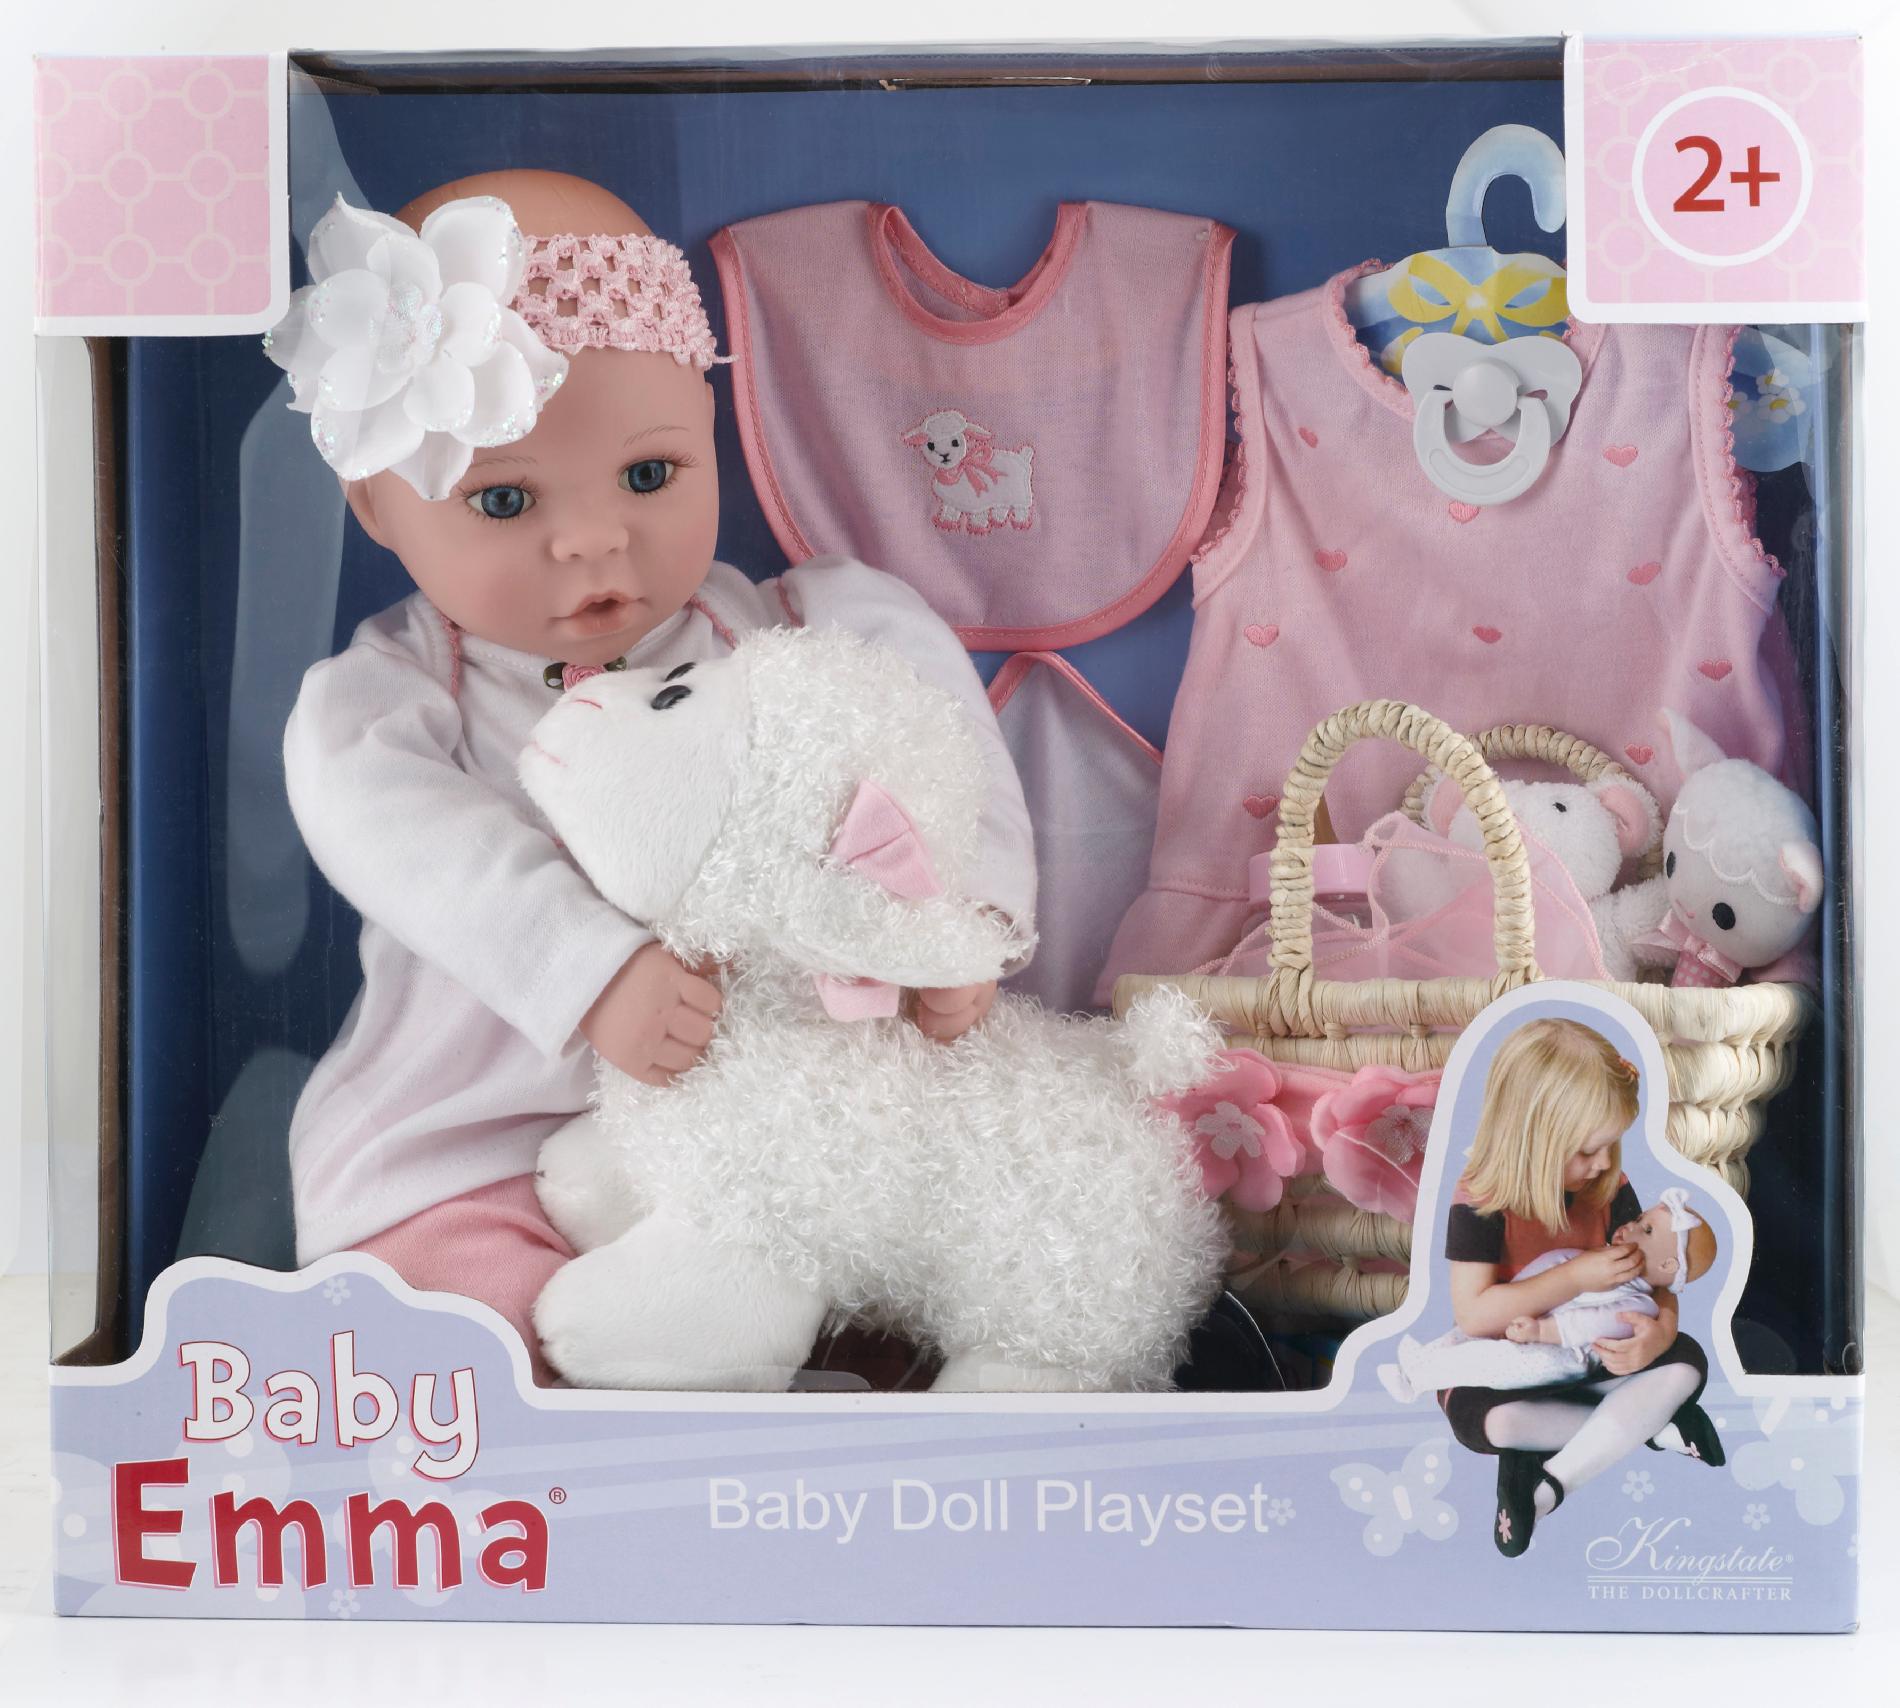 18" Baby Emma's Bye Bye Play Set with Plush Animal